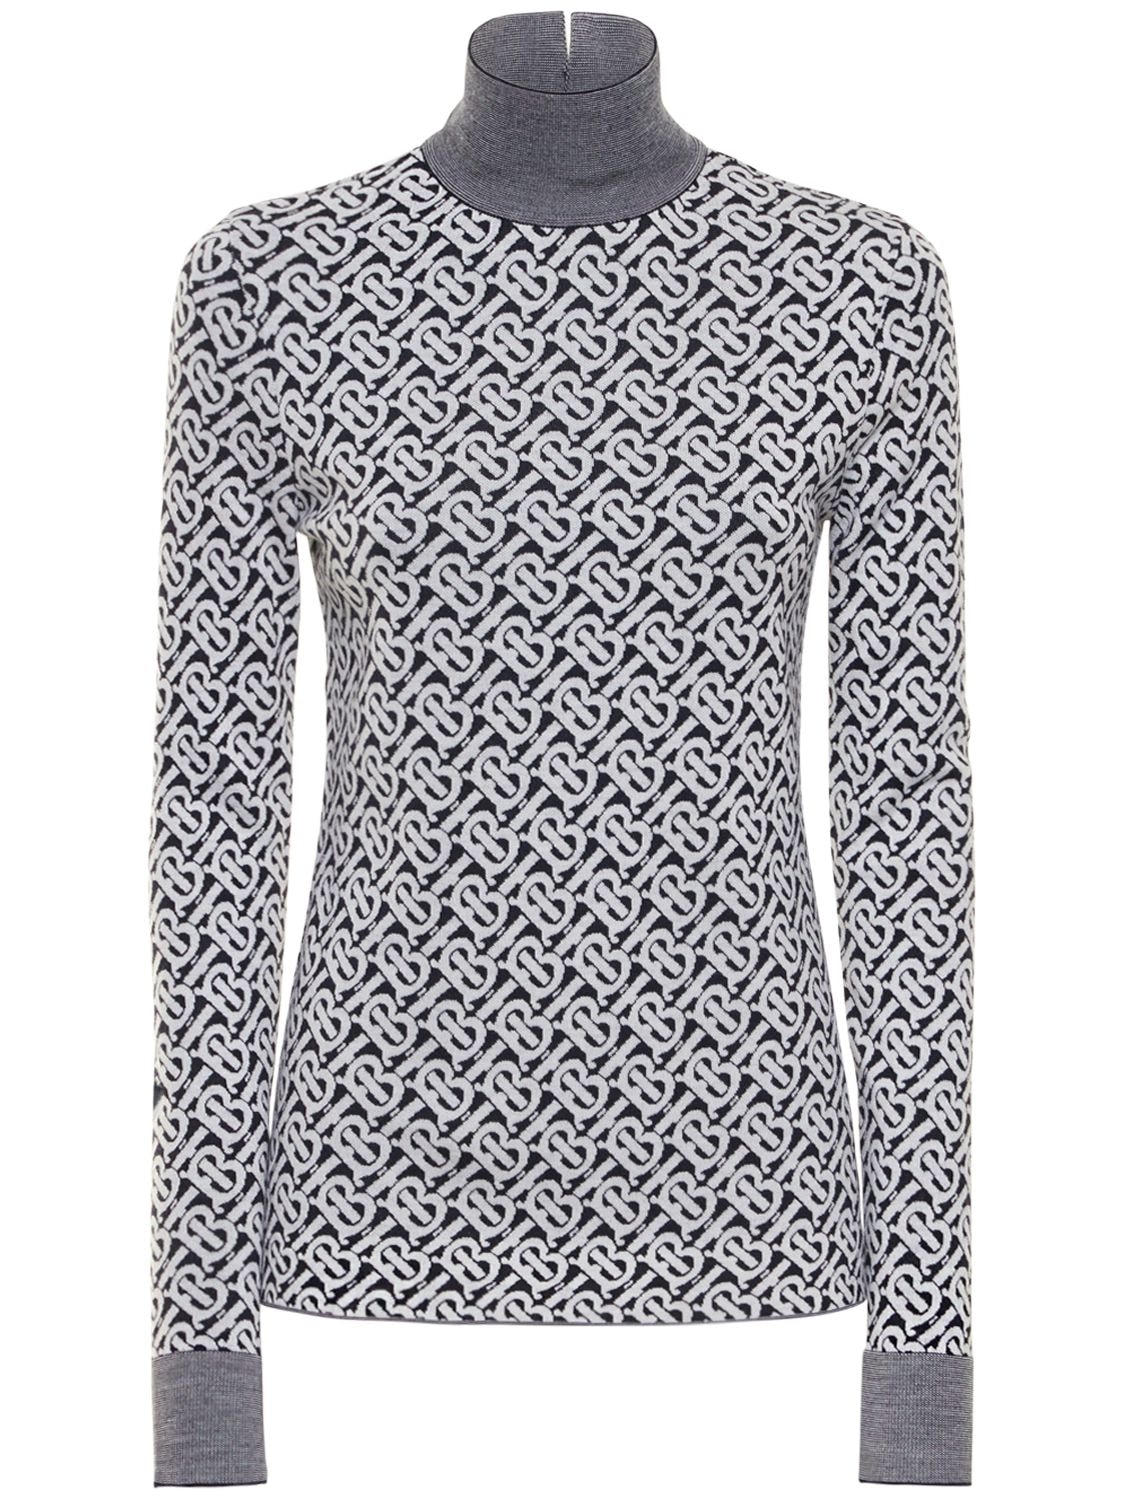 BURBERRY Nicky Wool Monogram Turtleneck Sweater for Women